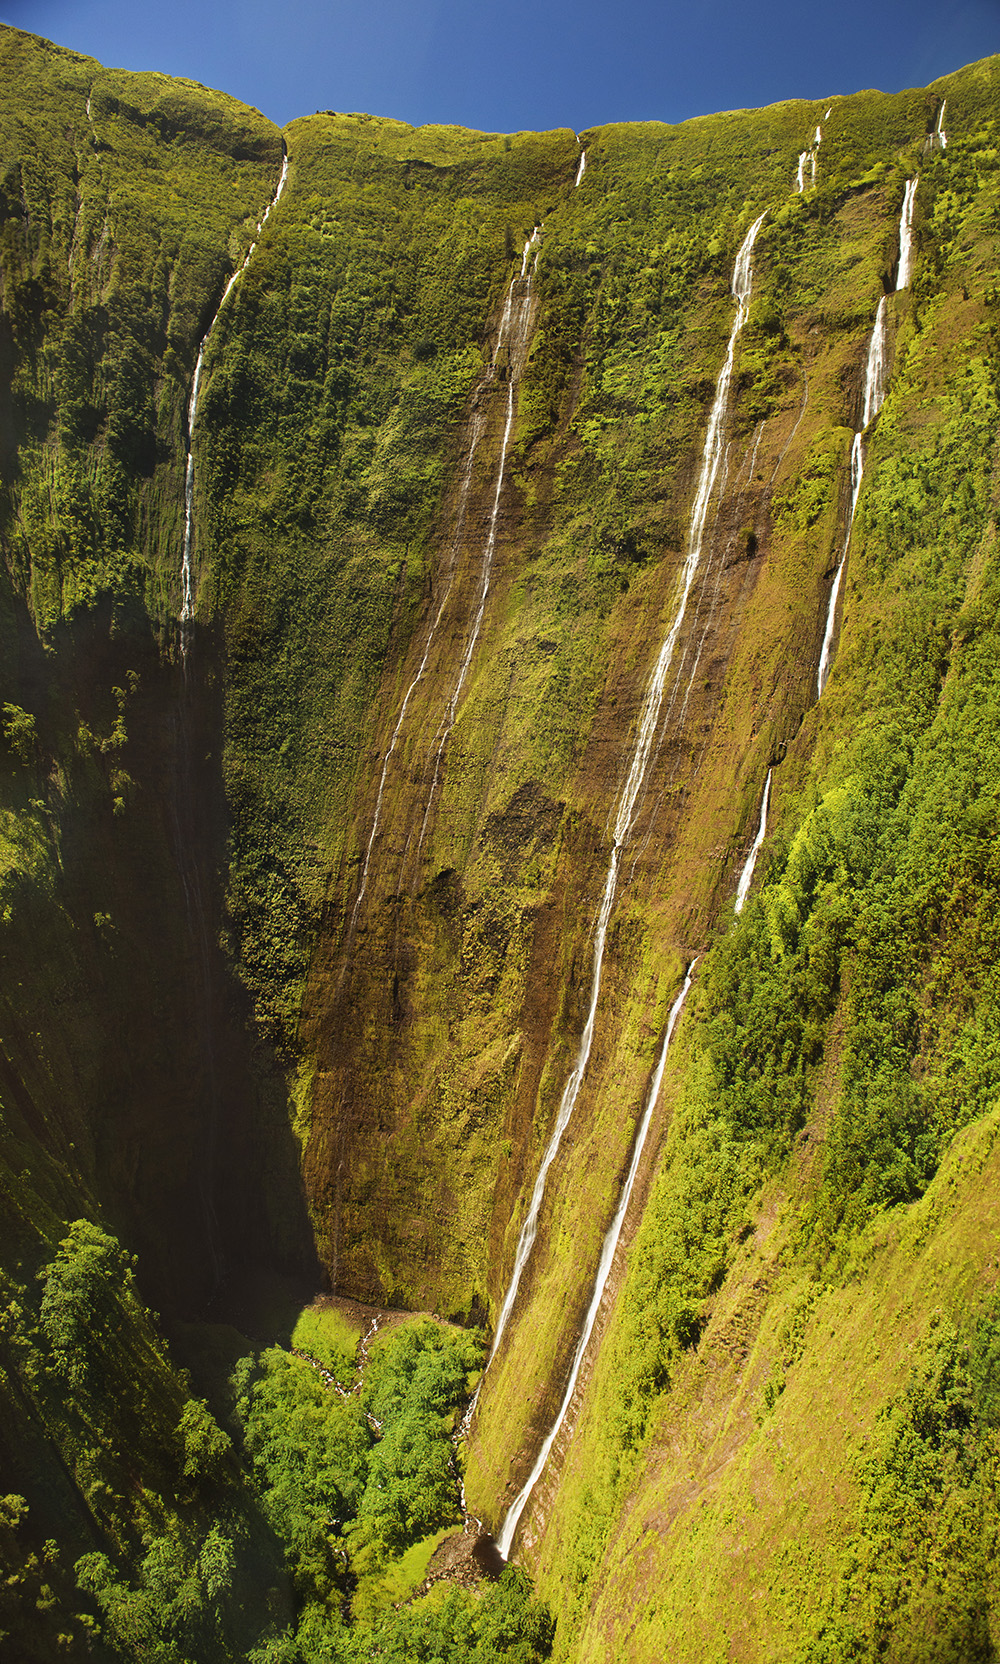 #waterfall, #hawaii, #bluehawaiian, #photomerge, #nature, #rainyside, #wetside, #nikonD800